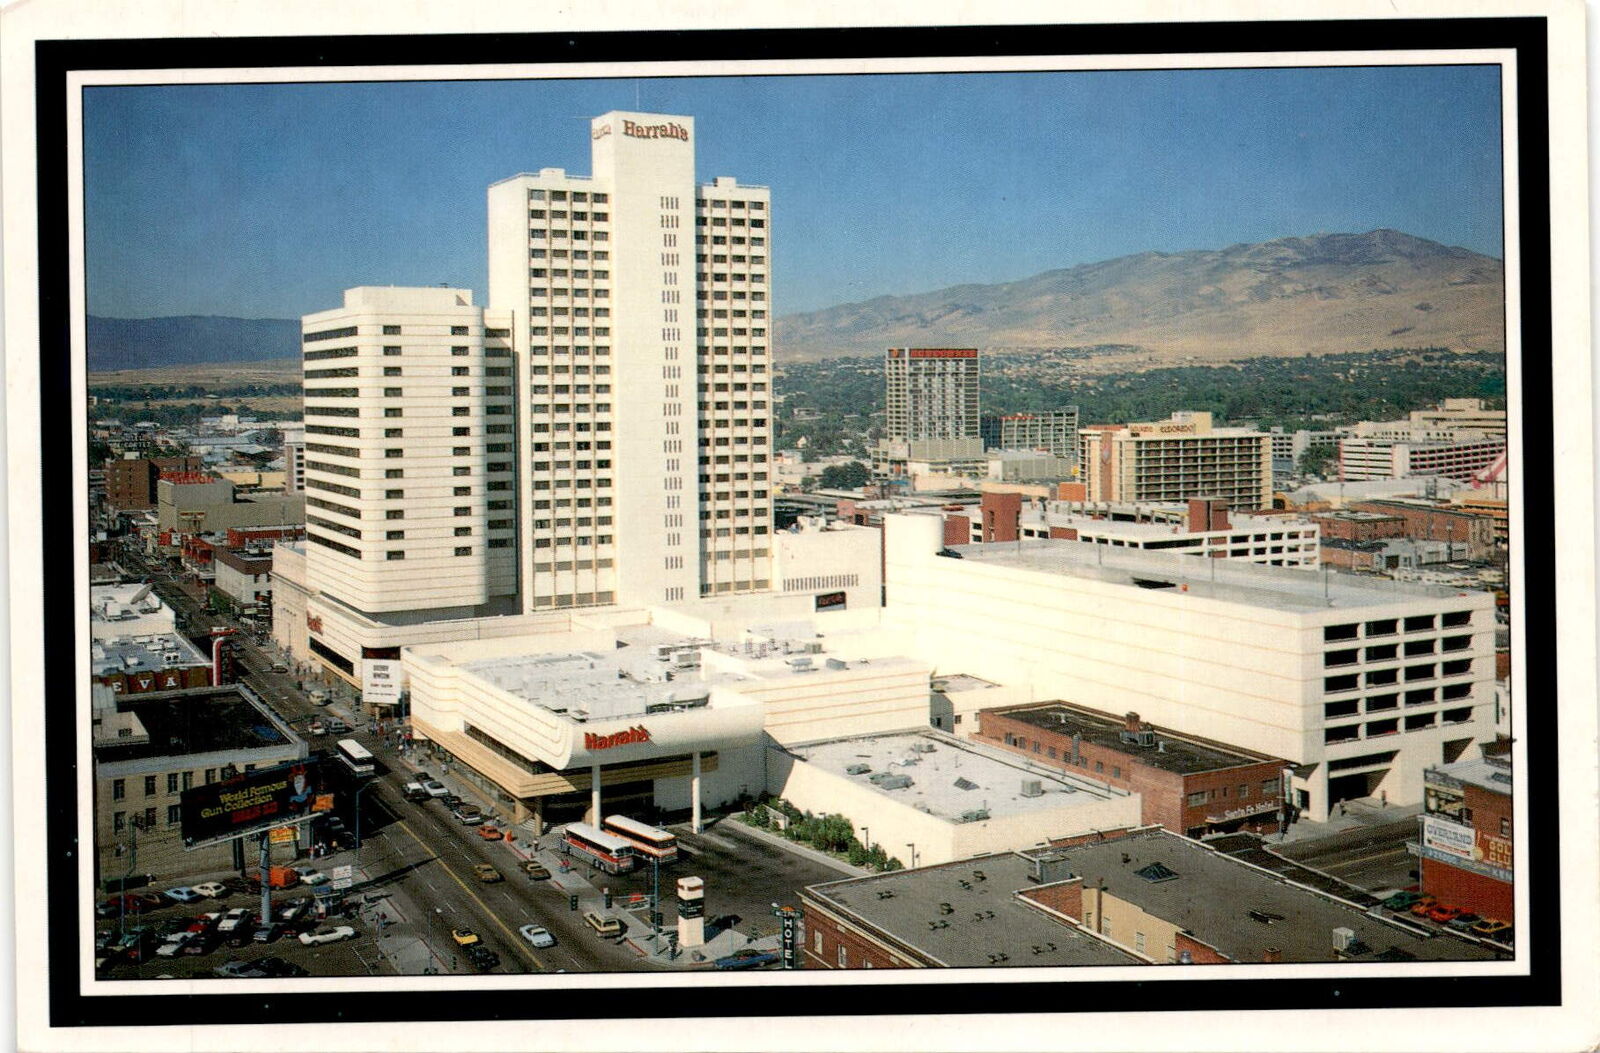 Harrah's Hotel and Casino, Reno, Nevada, Taiwan, 1986, gun collection Postcard